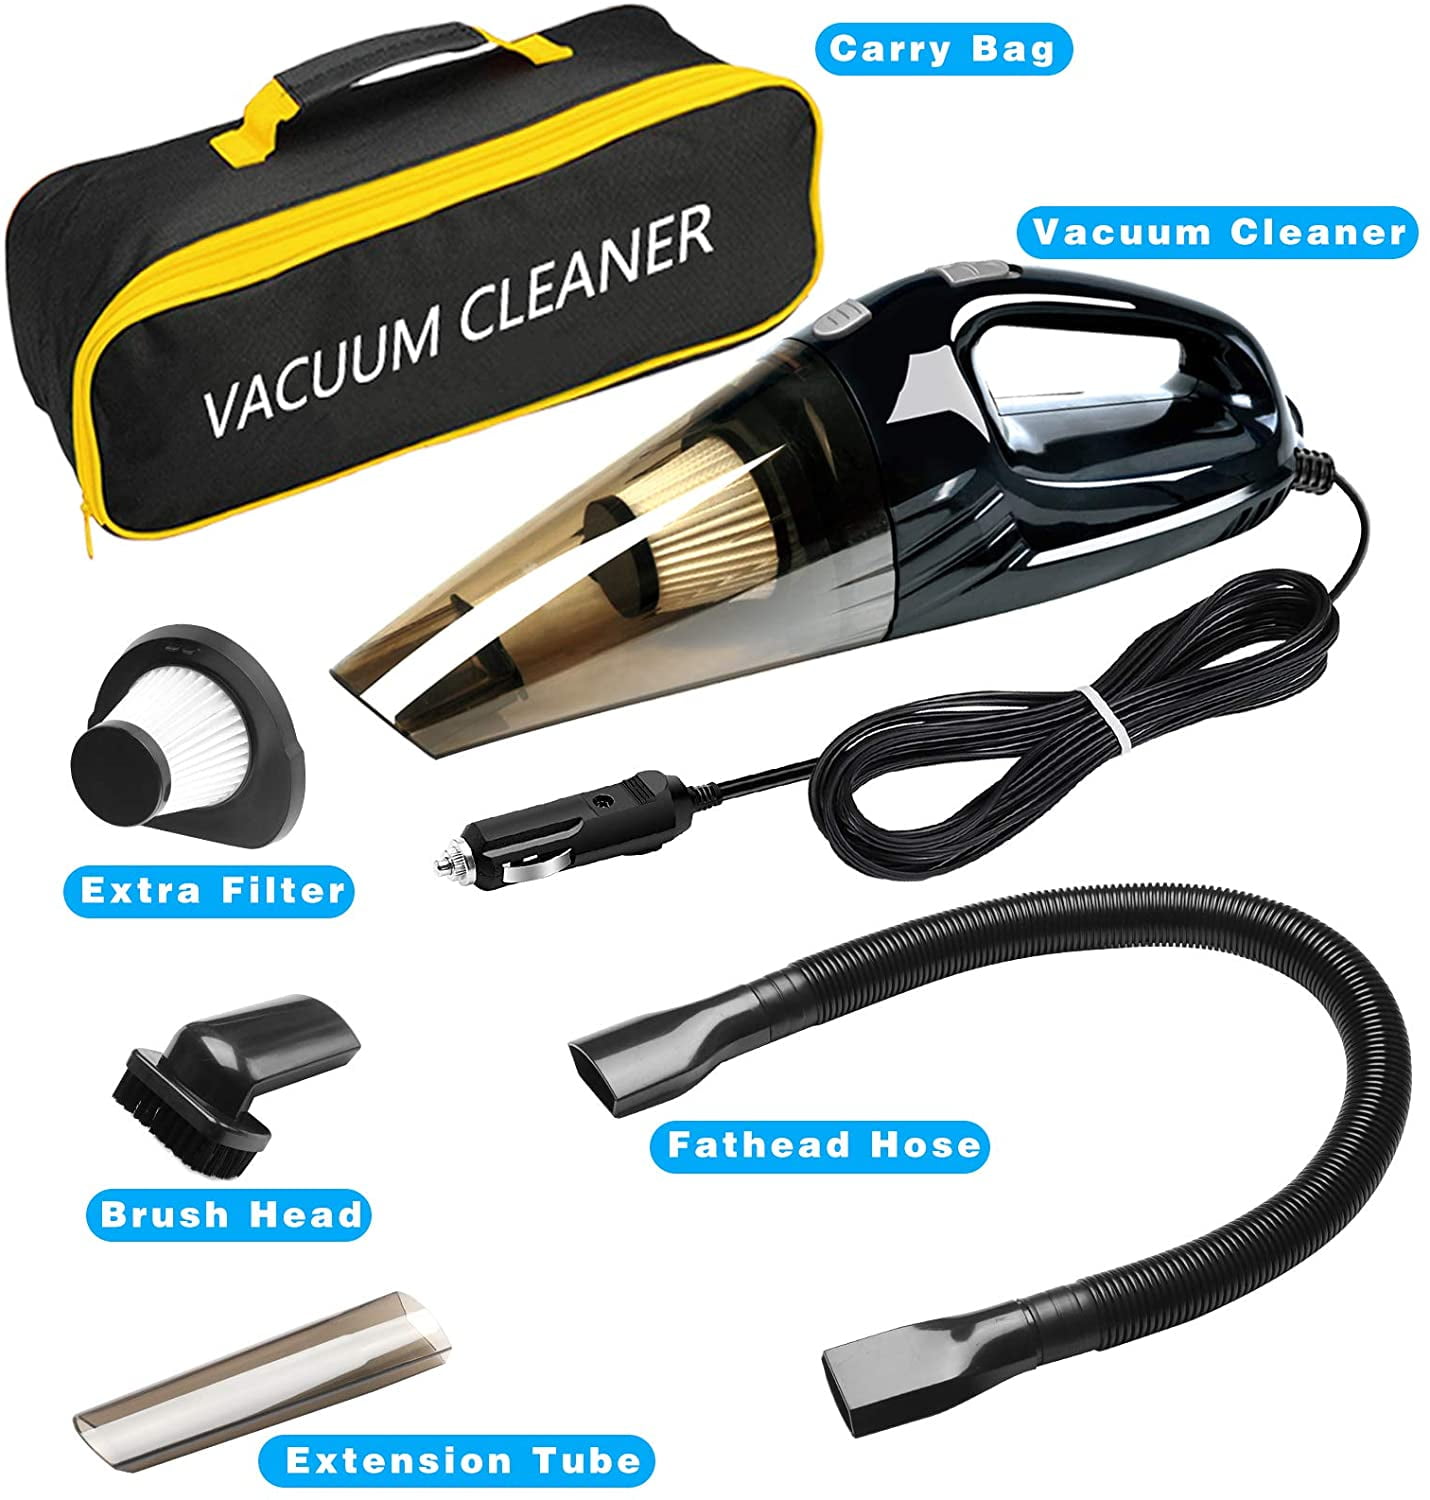 NEIKO 53730A Portable Car Vacuum Cleaner Wet Dry, Wet Vacuum Cleaner f –  NEIKO®